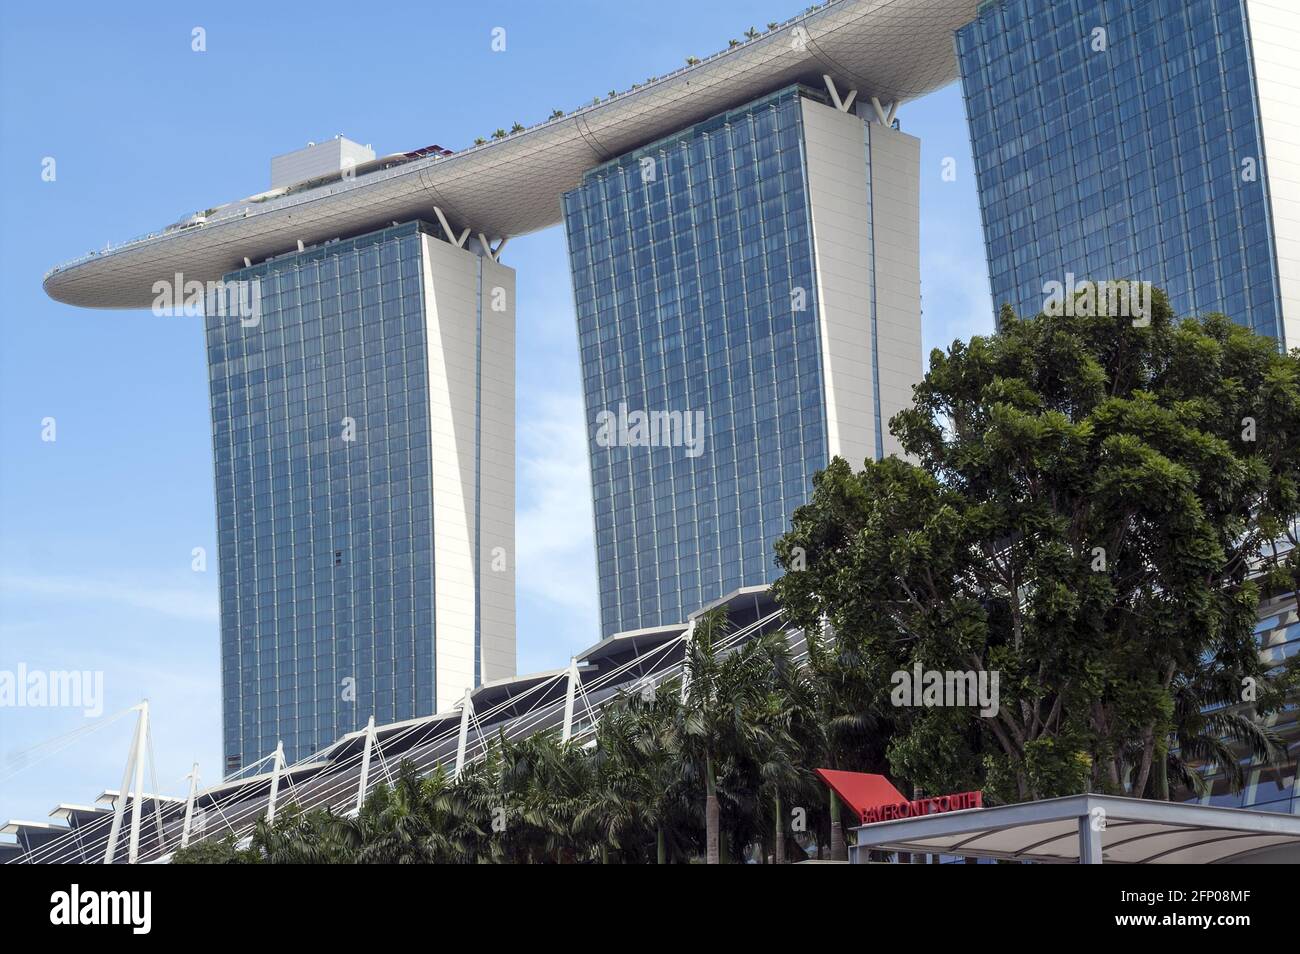 Singapore, Singapur, Asia, Asien; Luxury Marina Bay Sands Hotel and Casino; Luxuriöses Hotel und Casino; 濱海灣金沙酒店 Luksusowy hotel i kasyno Stock Photo